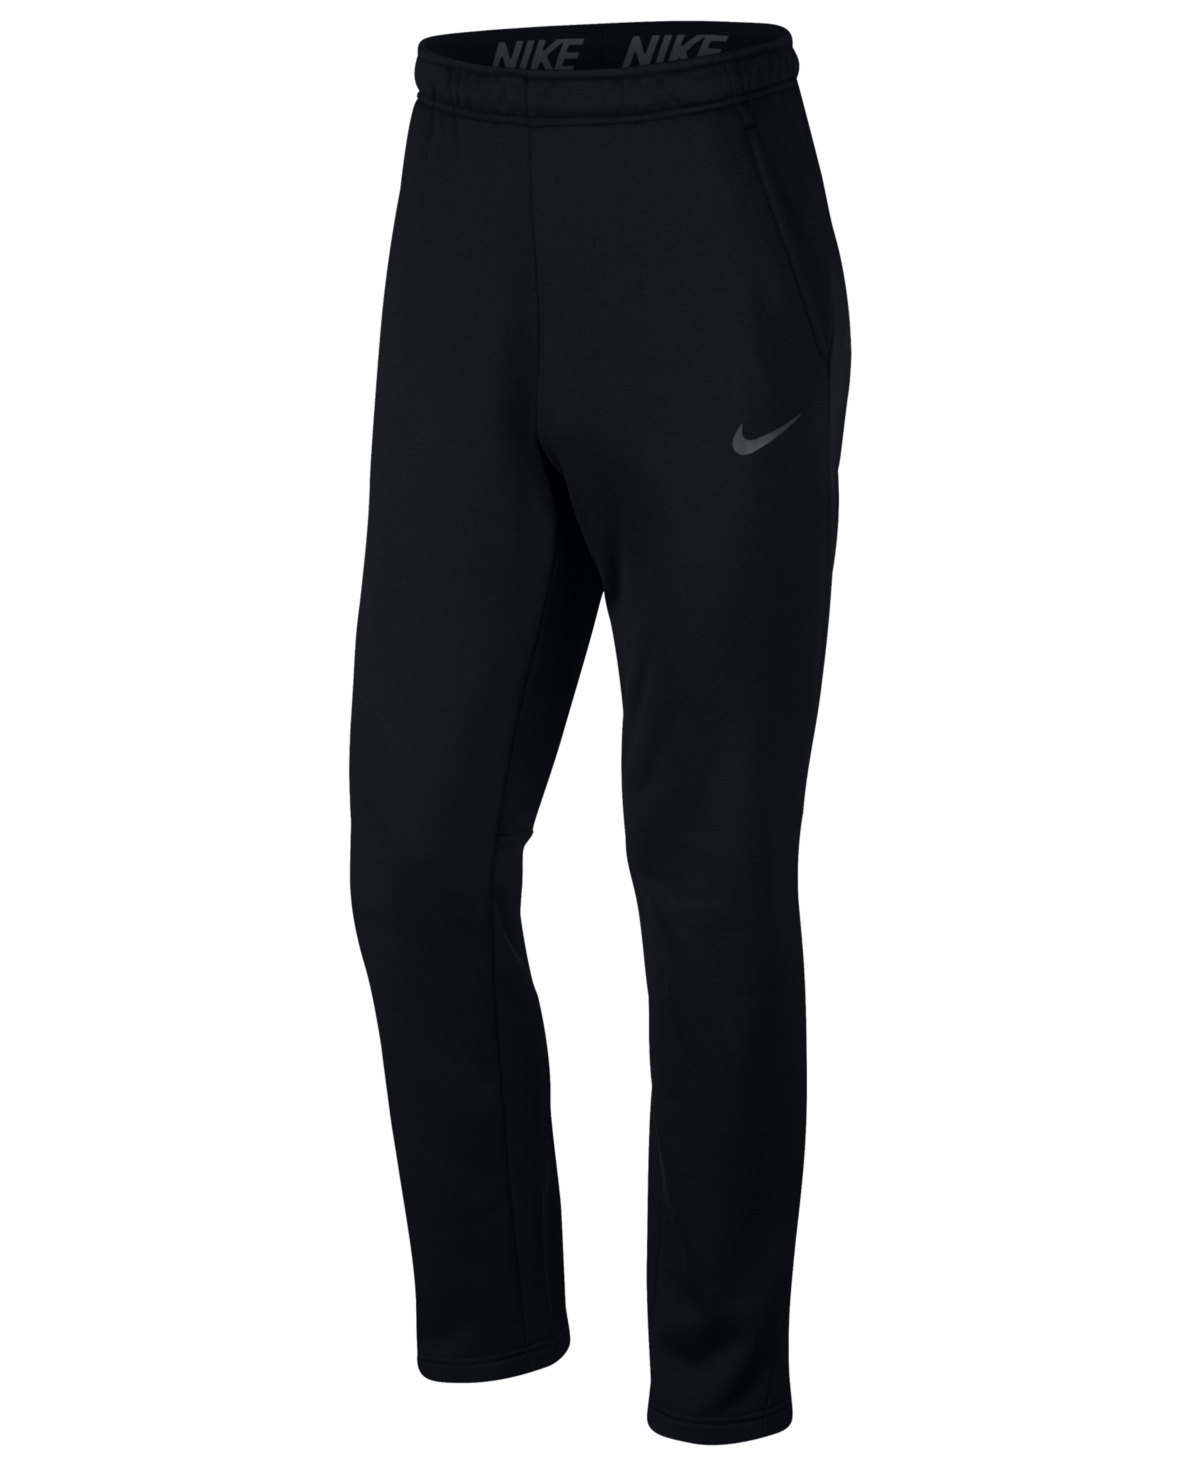 UPC 886668211572 product image for Nike Men's Therma Open Bottom Training Pants | upcitemdb.com